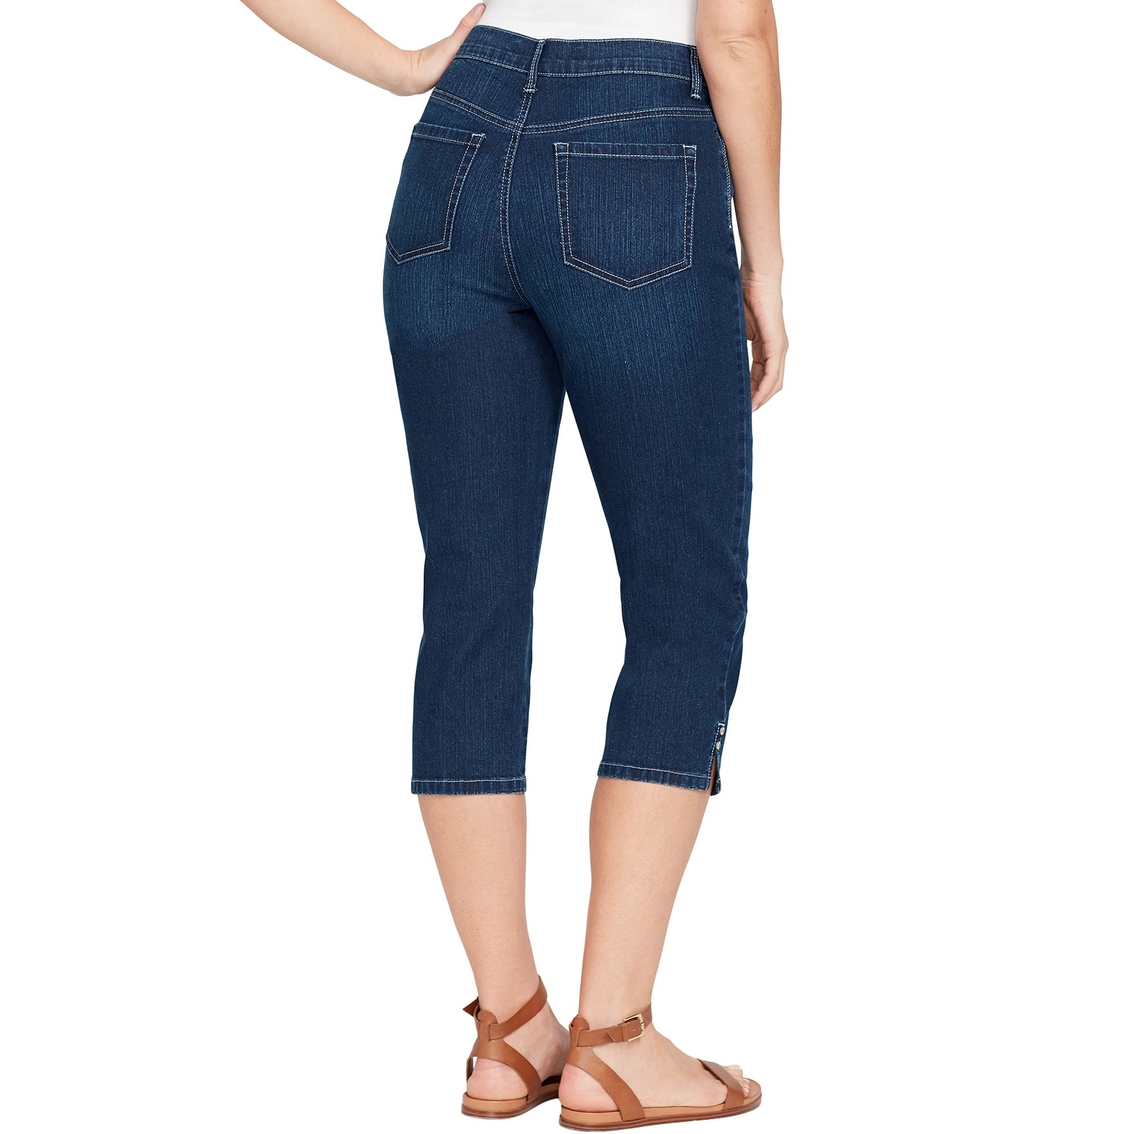 Gloria Vanderbilt Stretch Denim Twill Capris | Jeans | Clothing ...